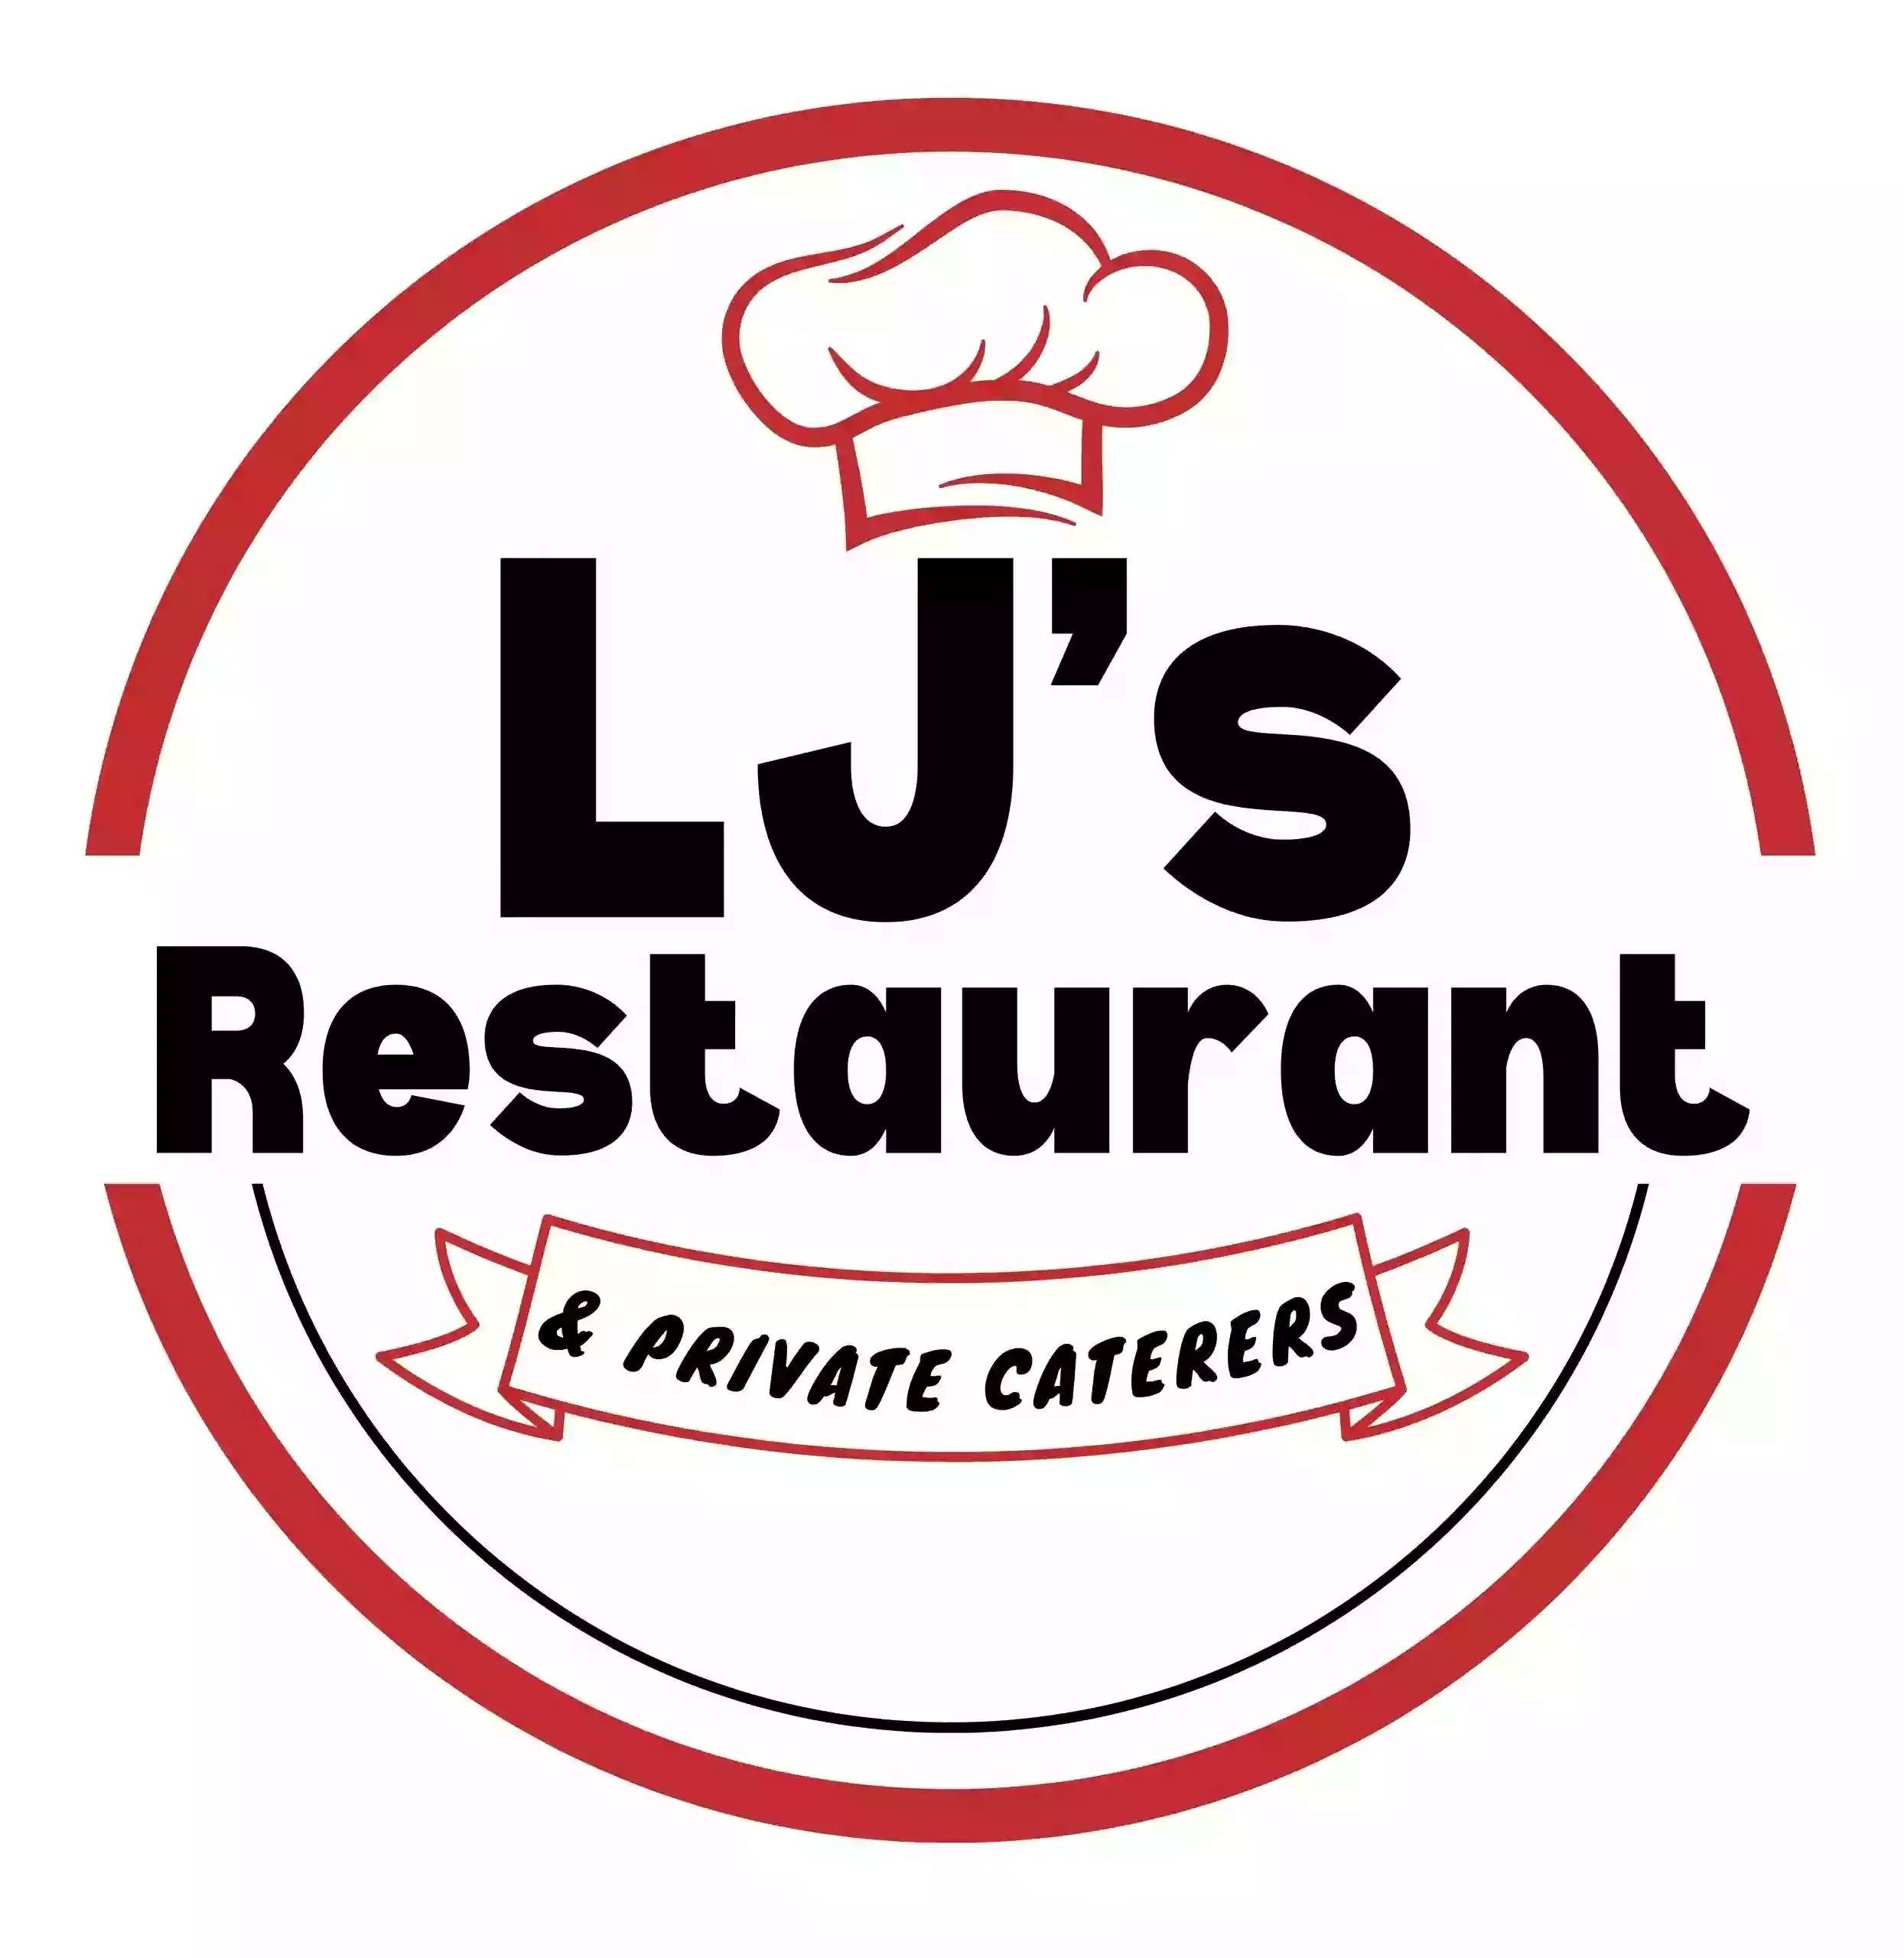 Lj's Restaurant & Private Caterers